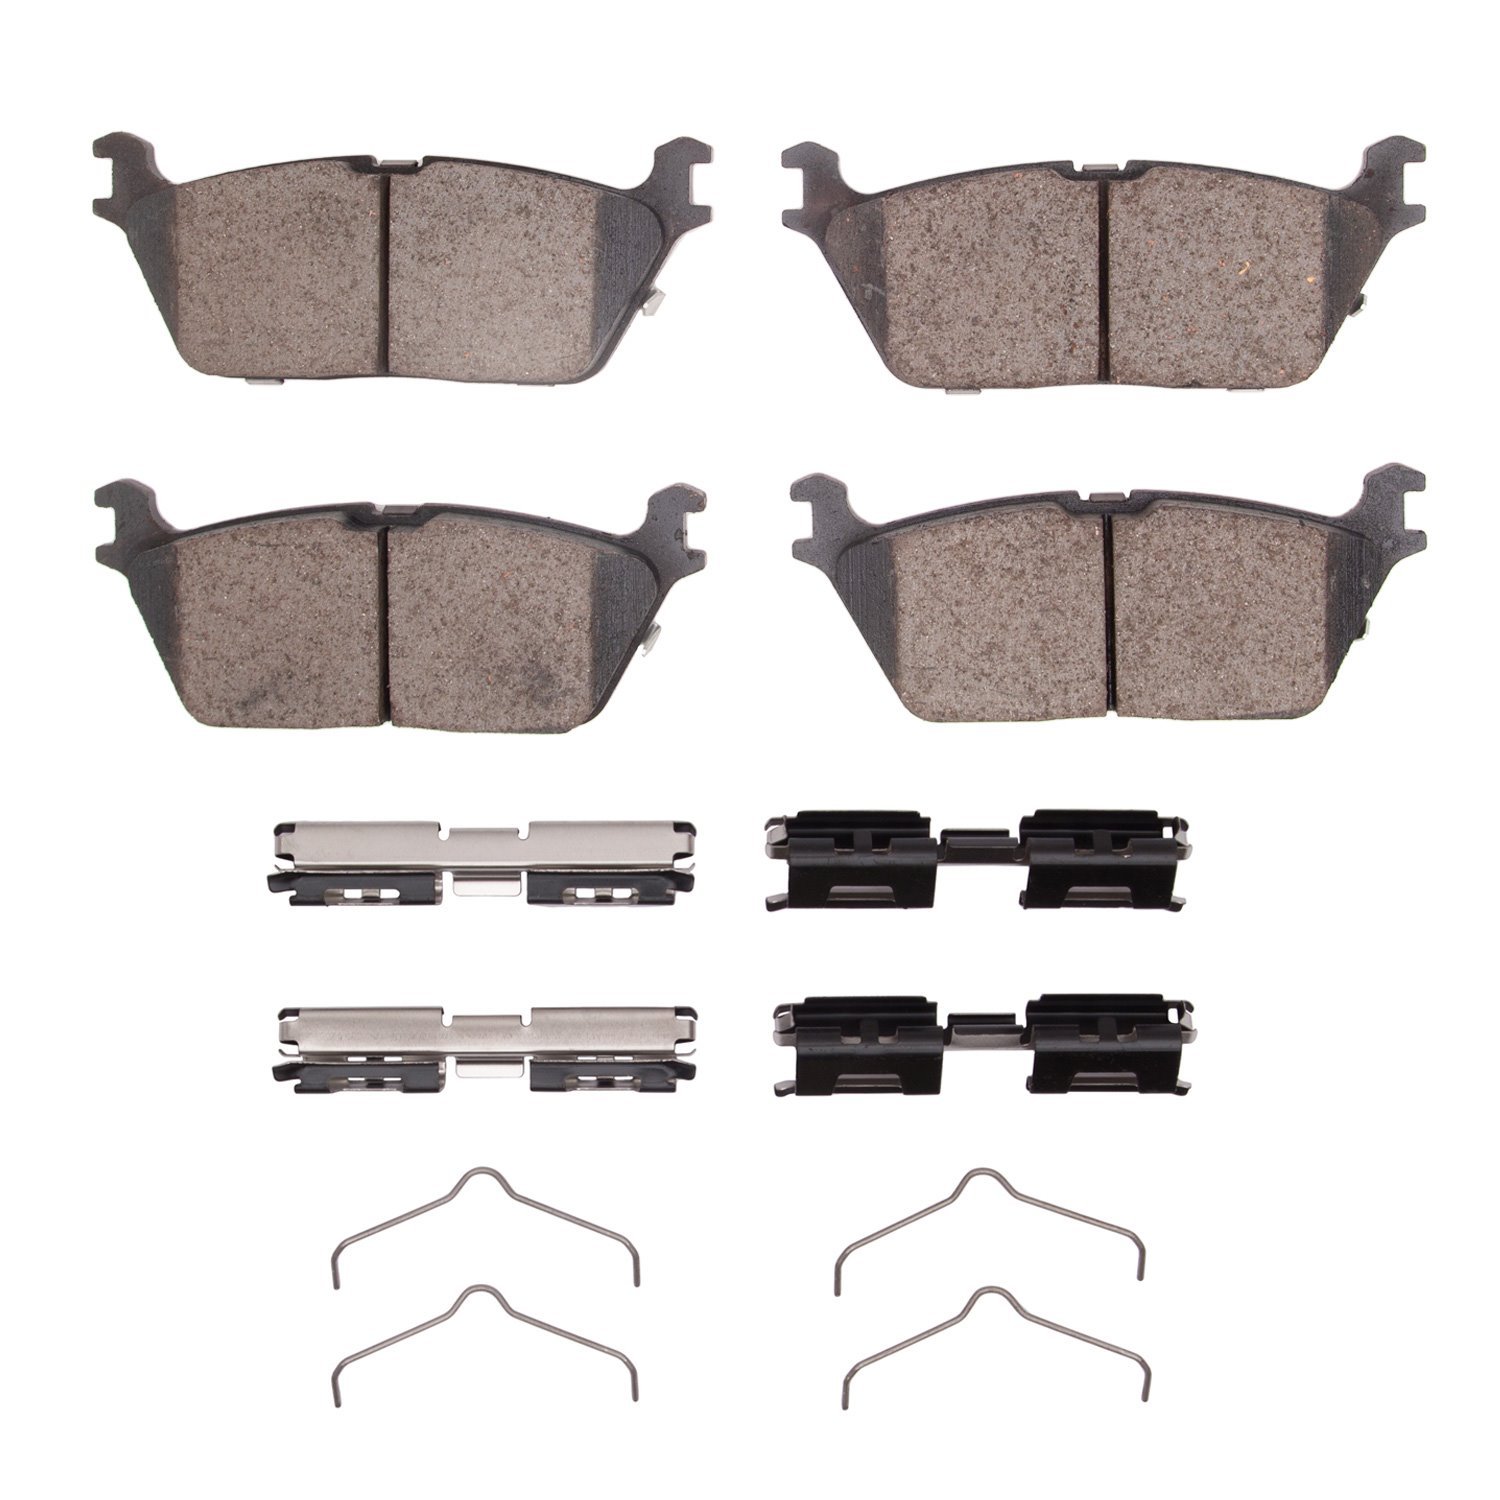 1400-2169-01 Ultimate-Duty Brake Pads & Hardware Kit, Fits Select Mopar, Position: Rear